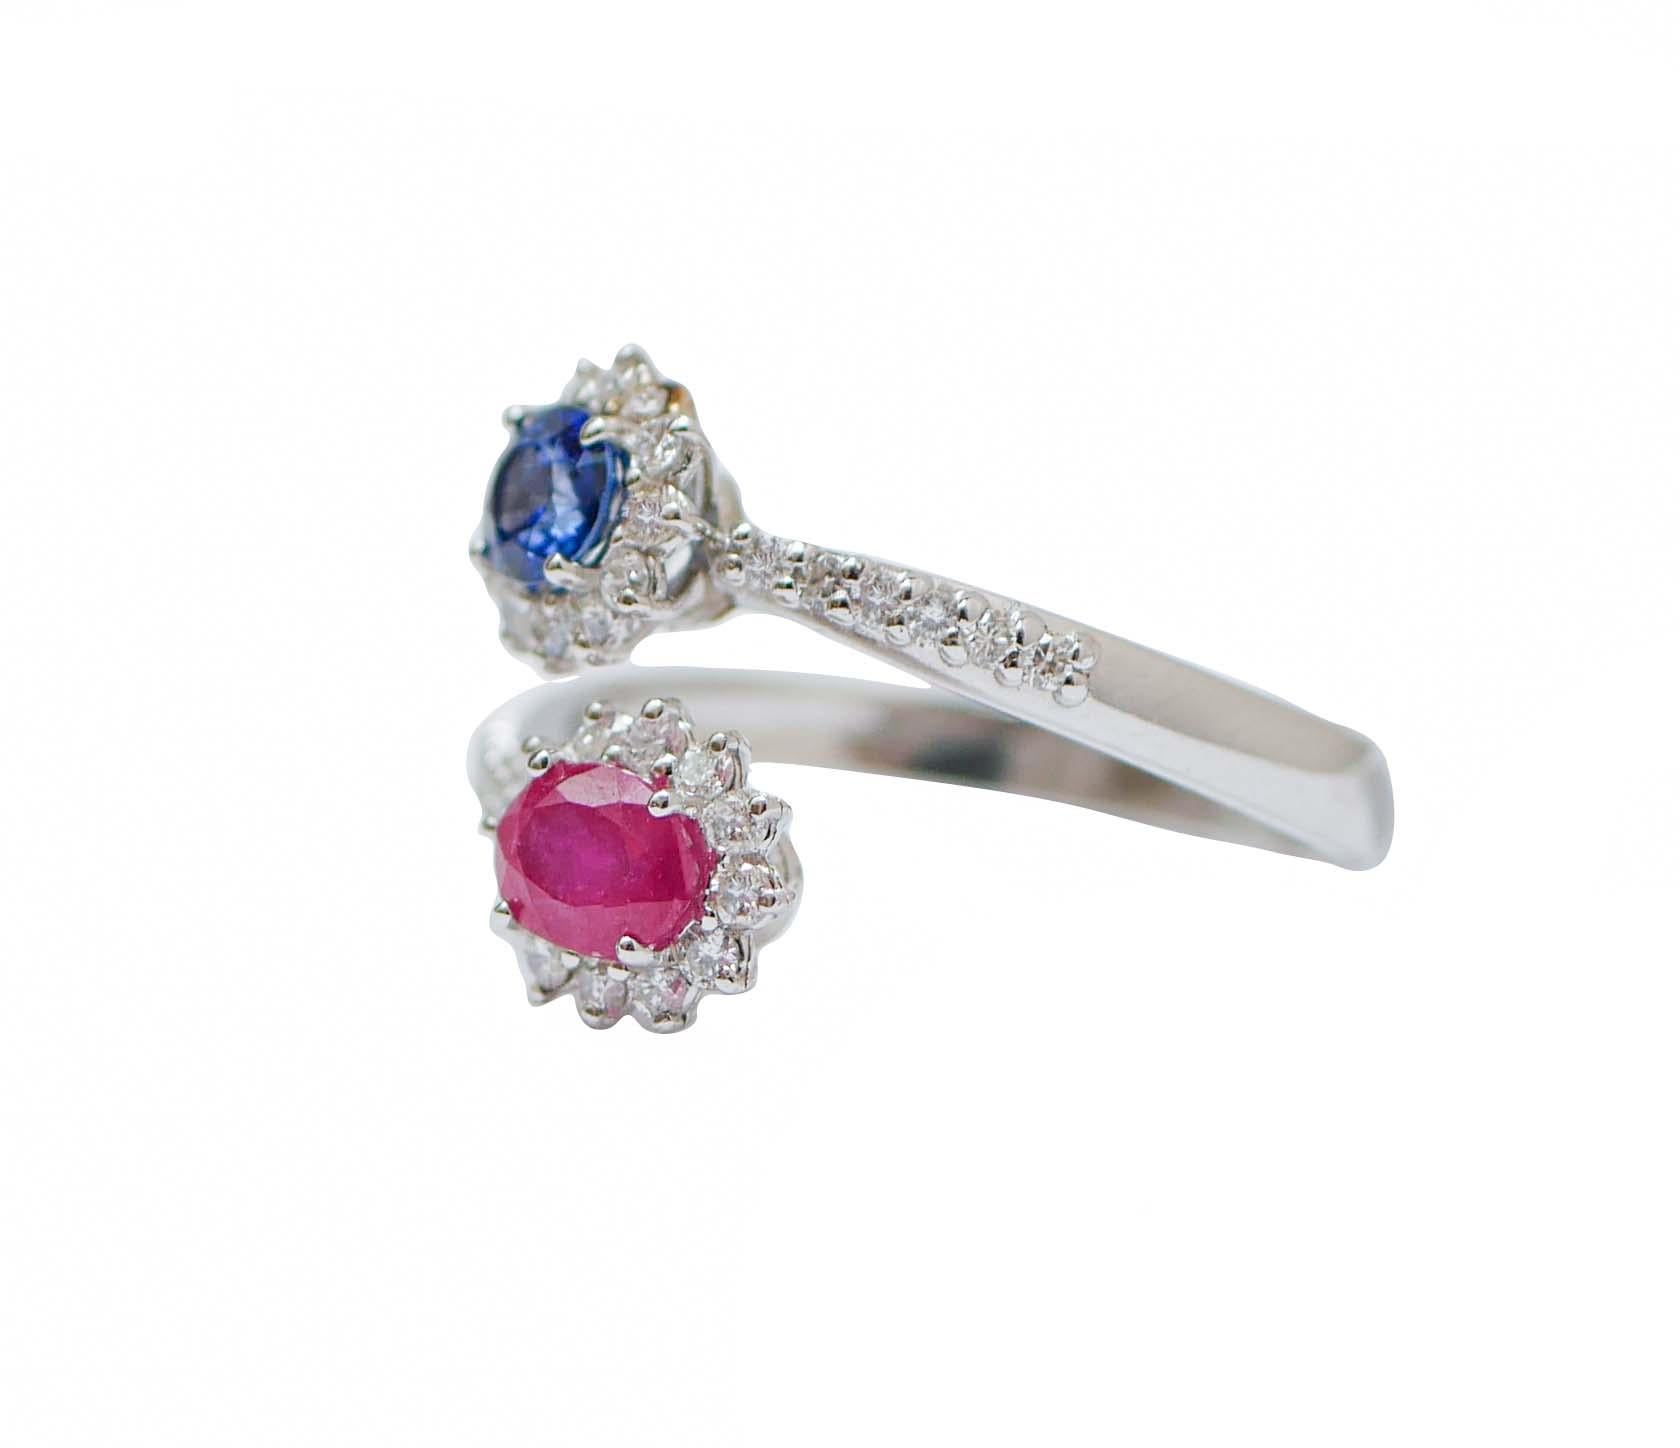 Mixed Cut Sapphire, Ruby, Diamonds, 18 Karat White Gold Modern Ring. For Sale